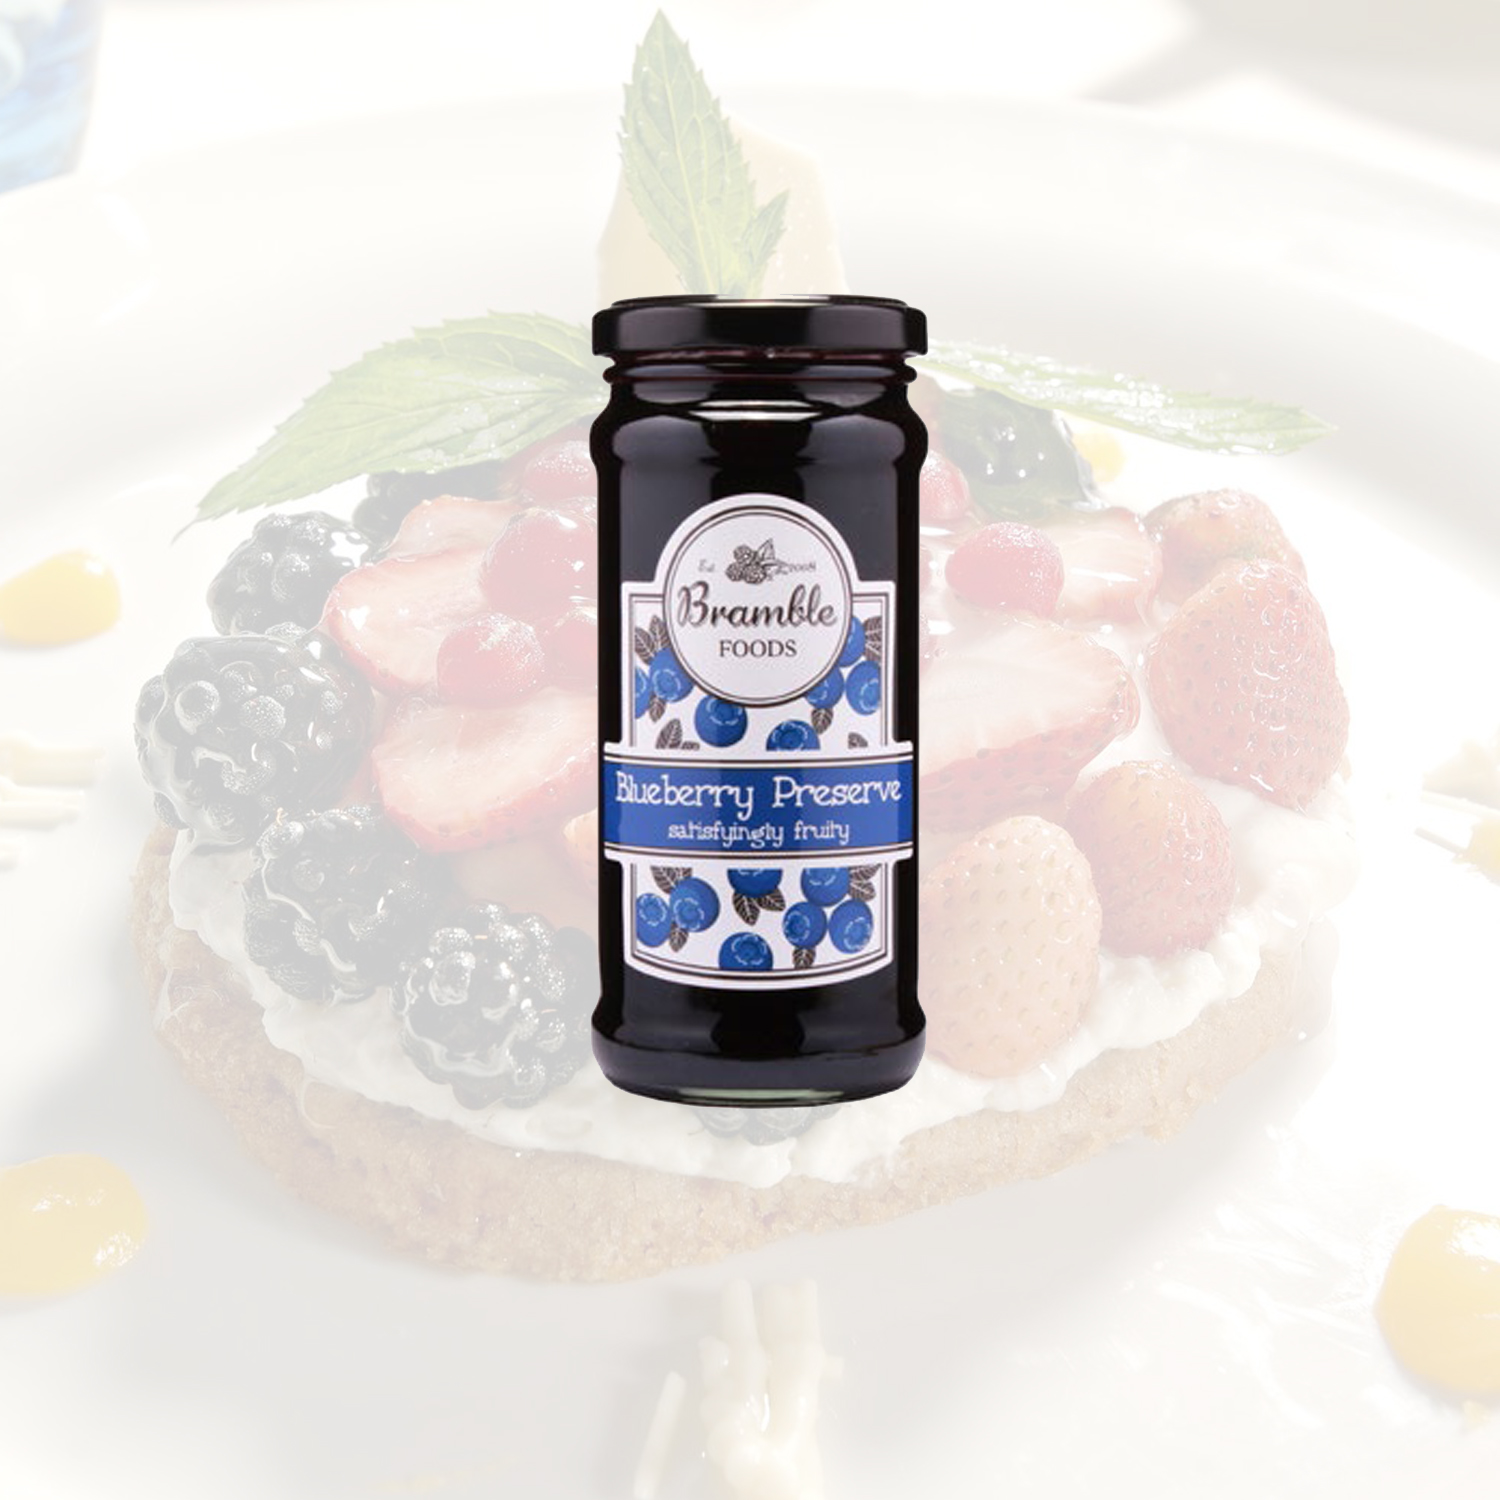 Blueberry preserve - Bramble Foods